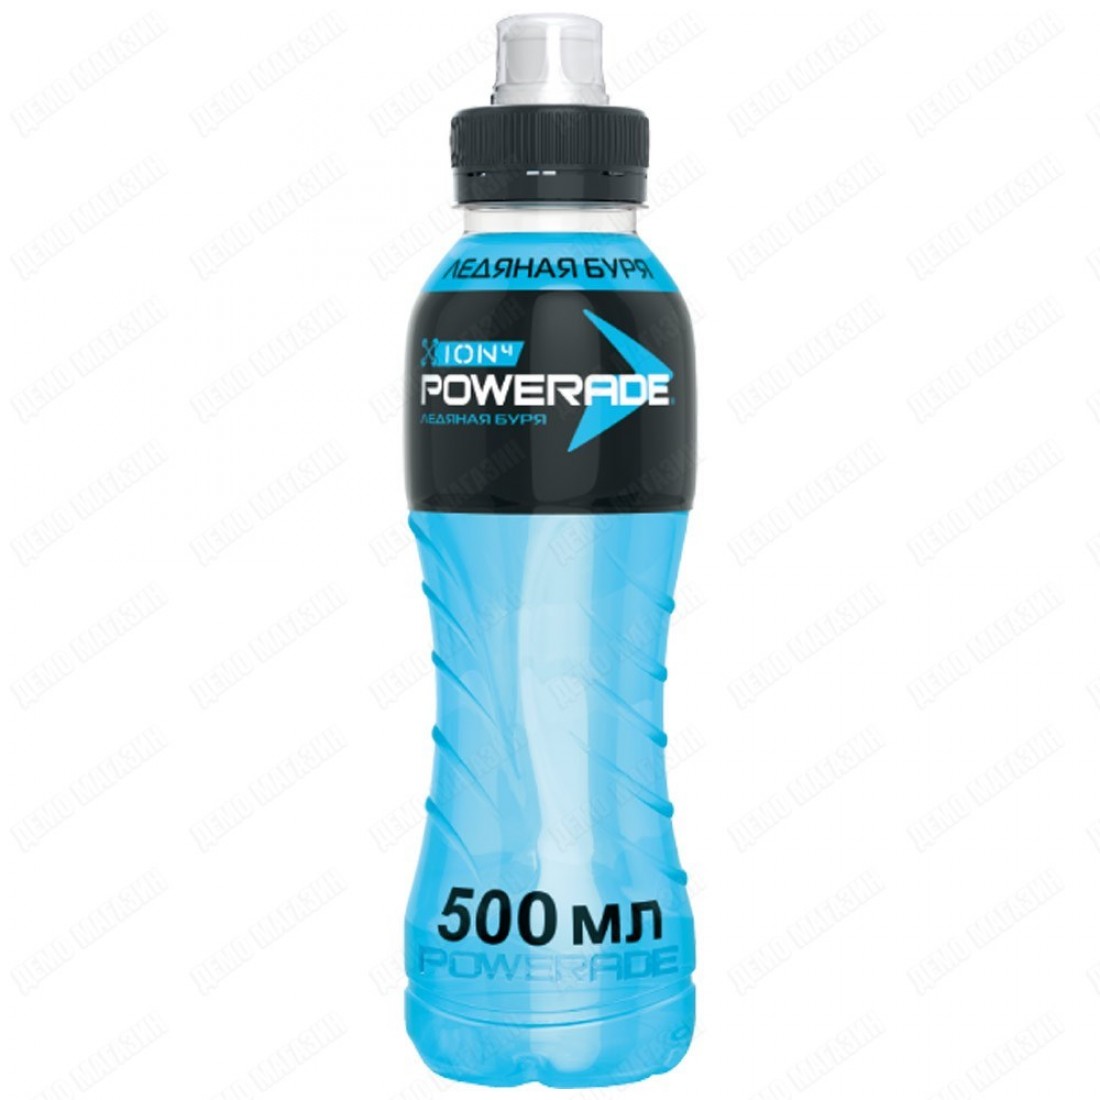 Power raid. Powerade ion 4 спортивный напиток (500 мл). Напиток Powerade Ледяная буря. Изотоник Powerade ion4. Powerade Ледяная буря 500 ml.